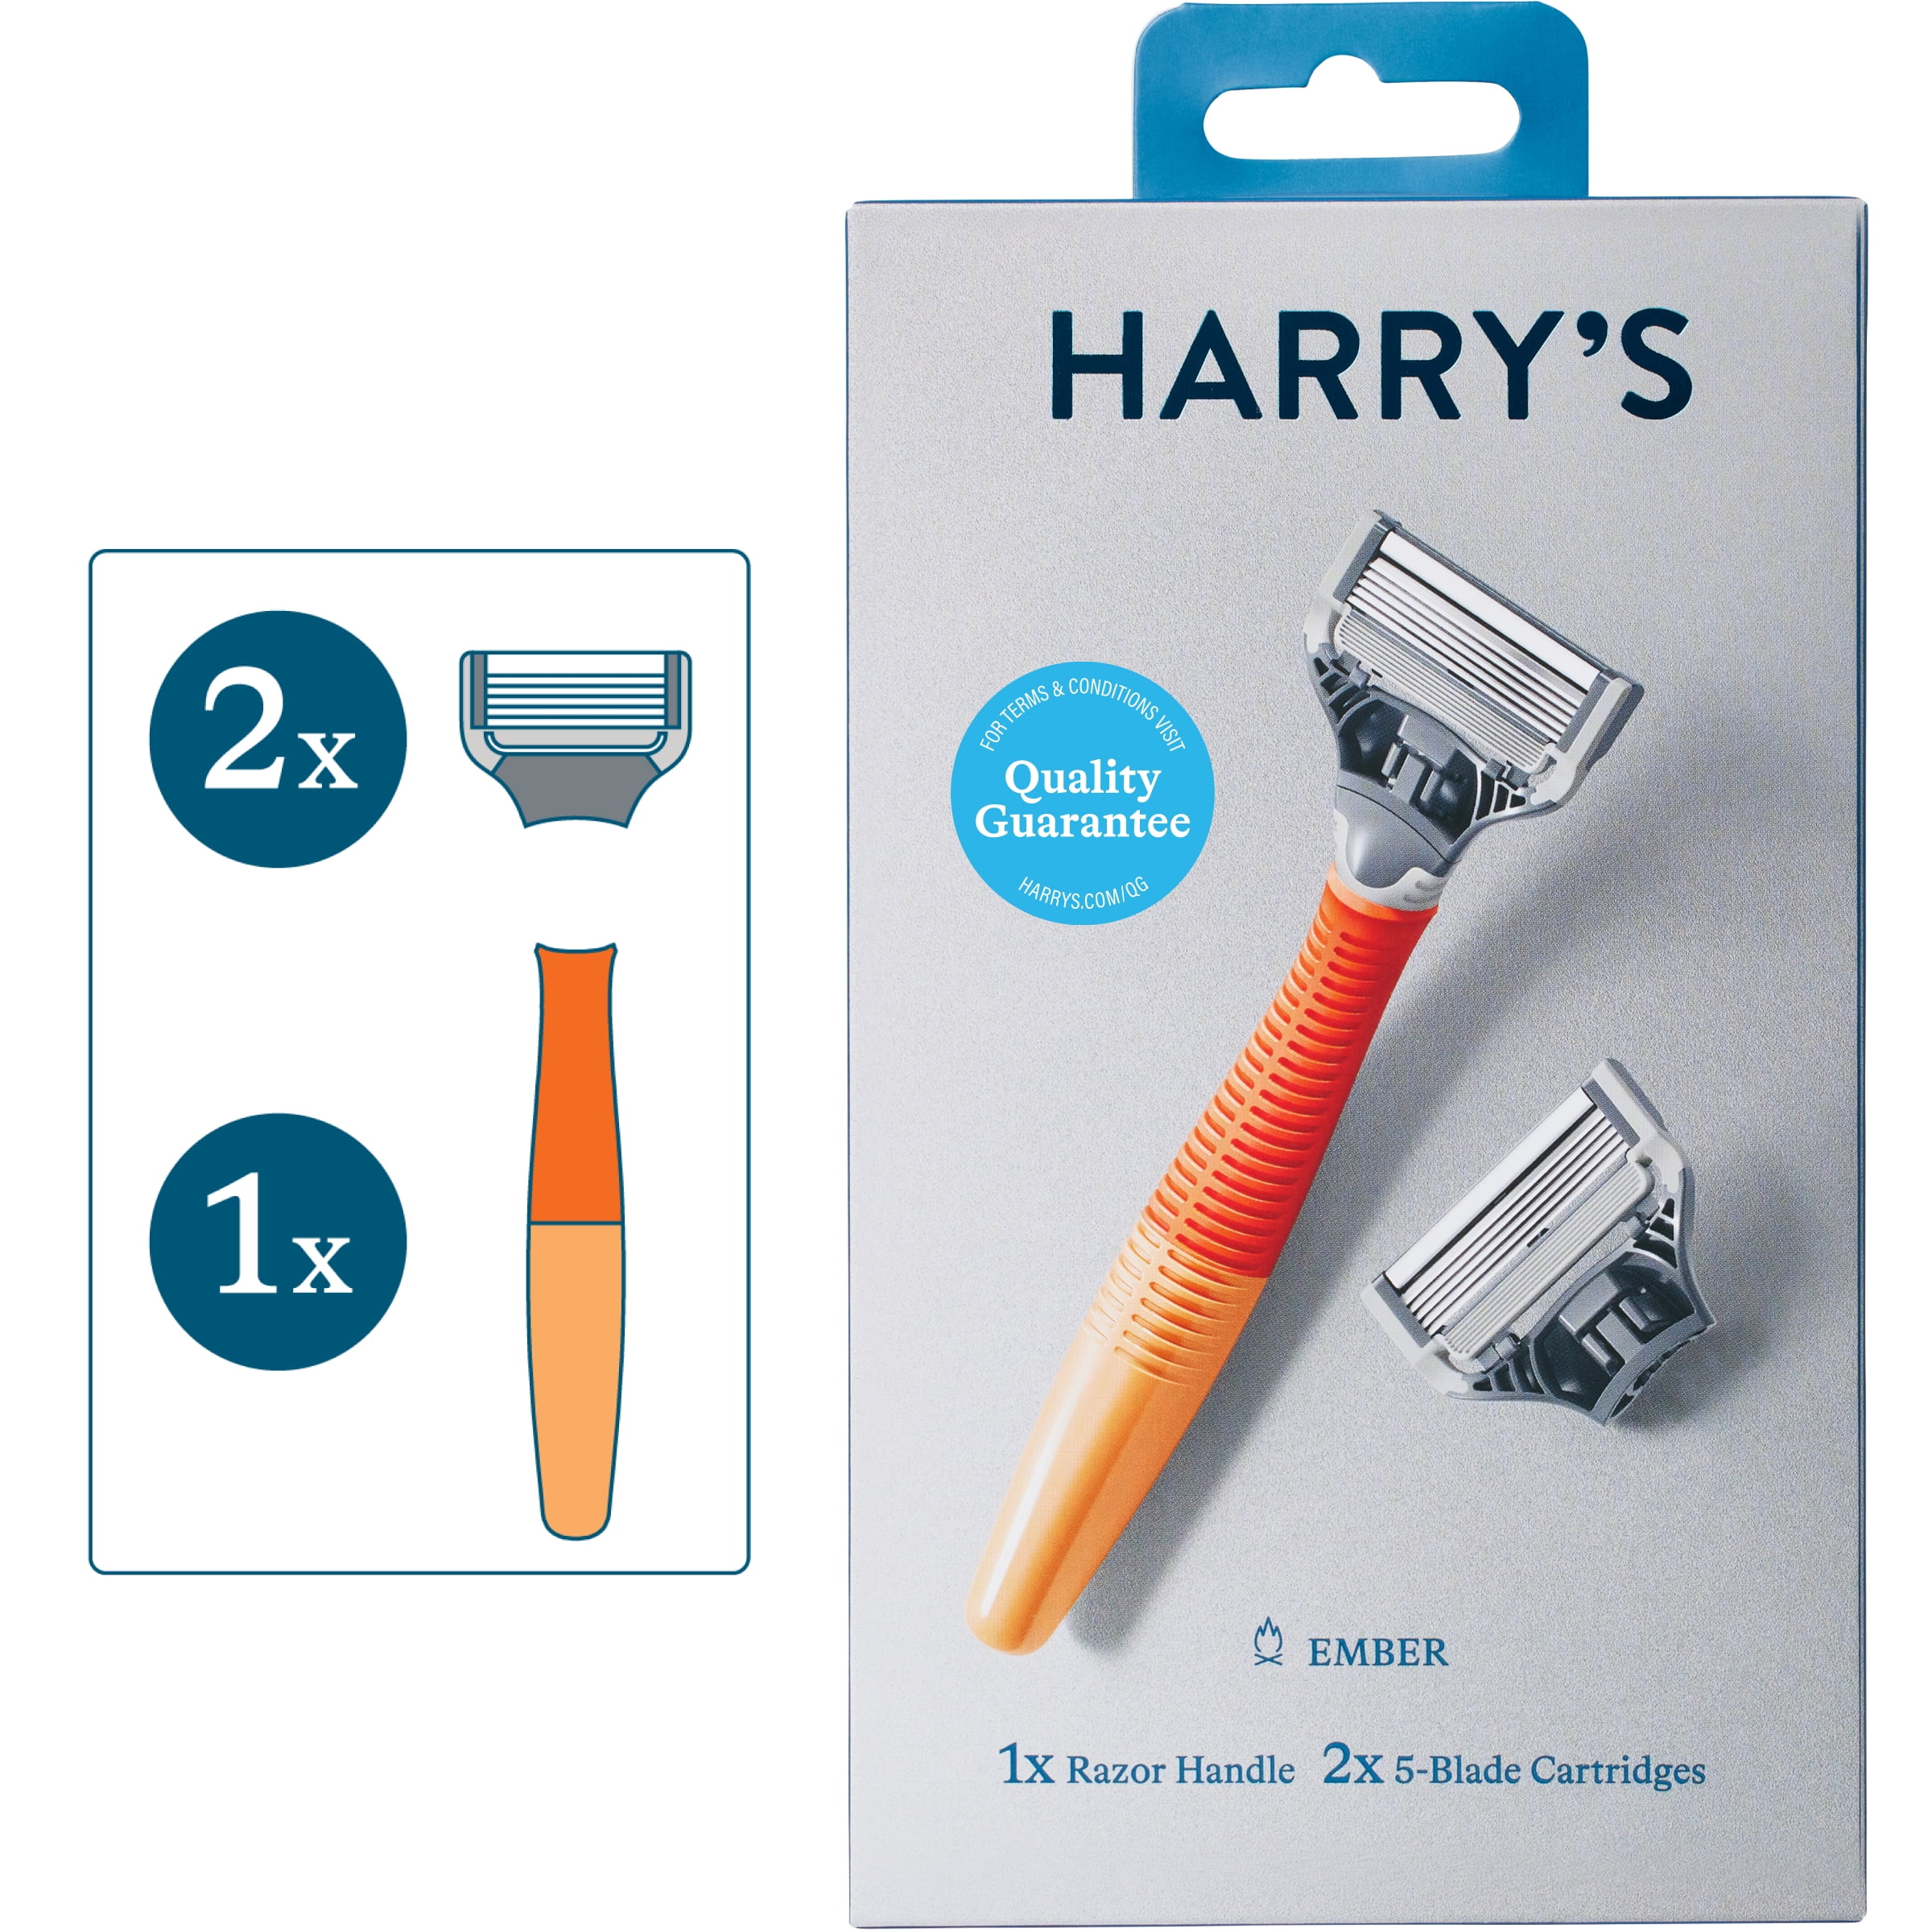 Harry's Razor 2x (5-blade Cartridges) - Bright Orange